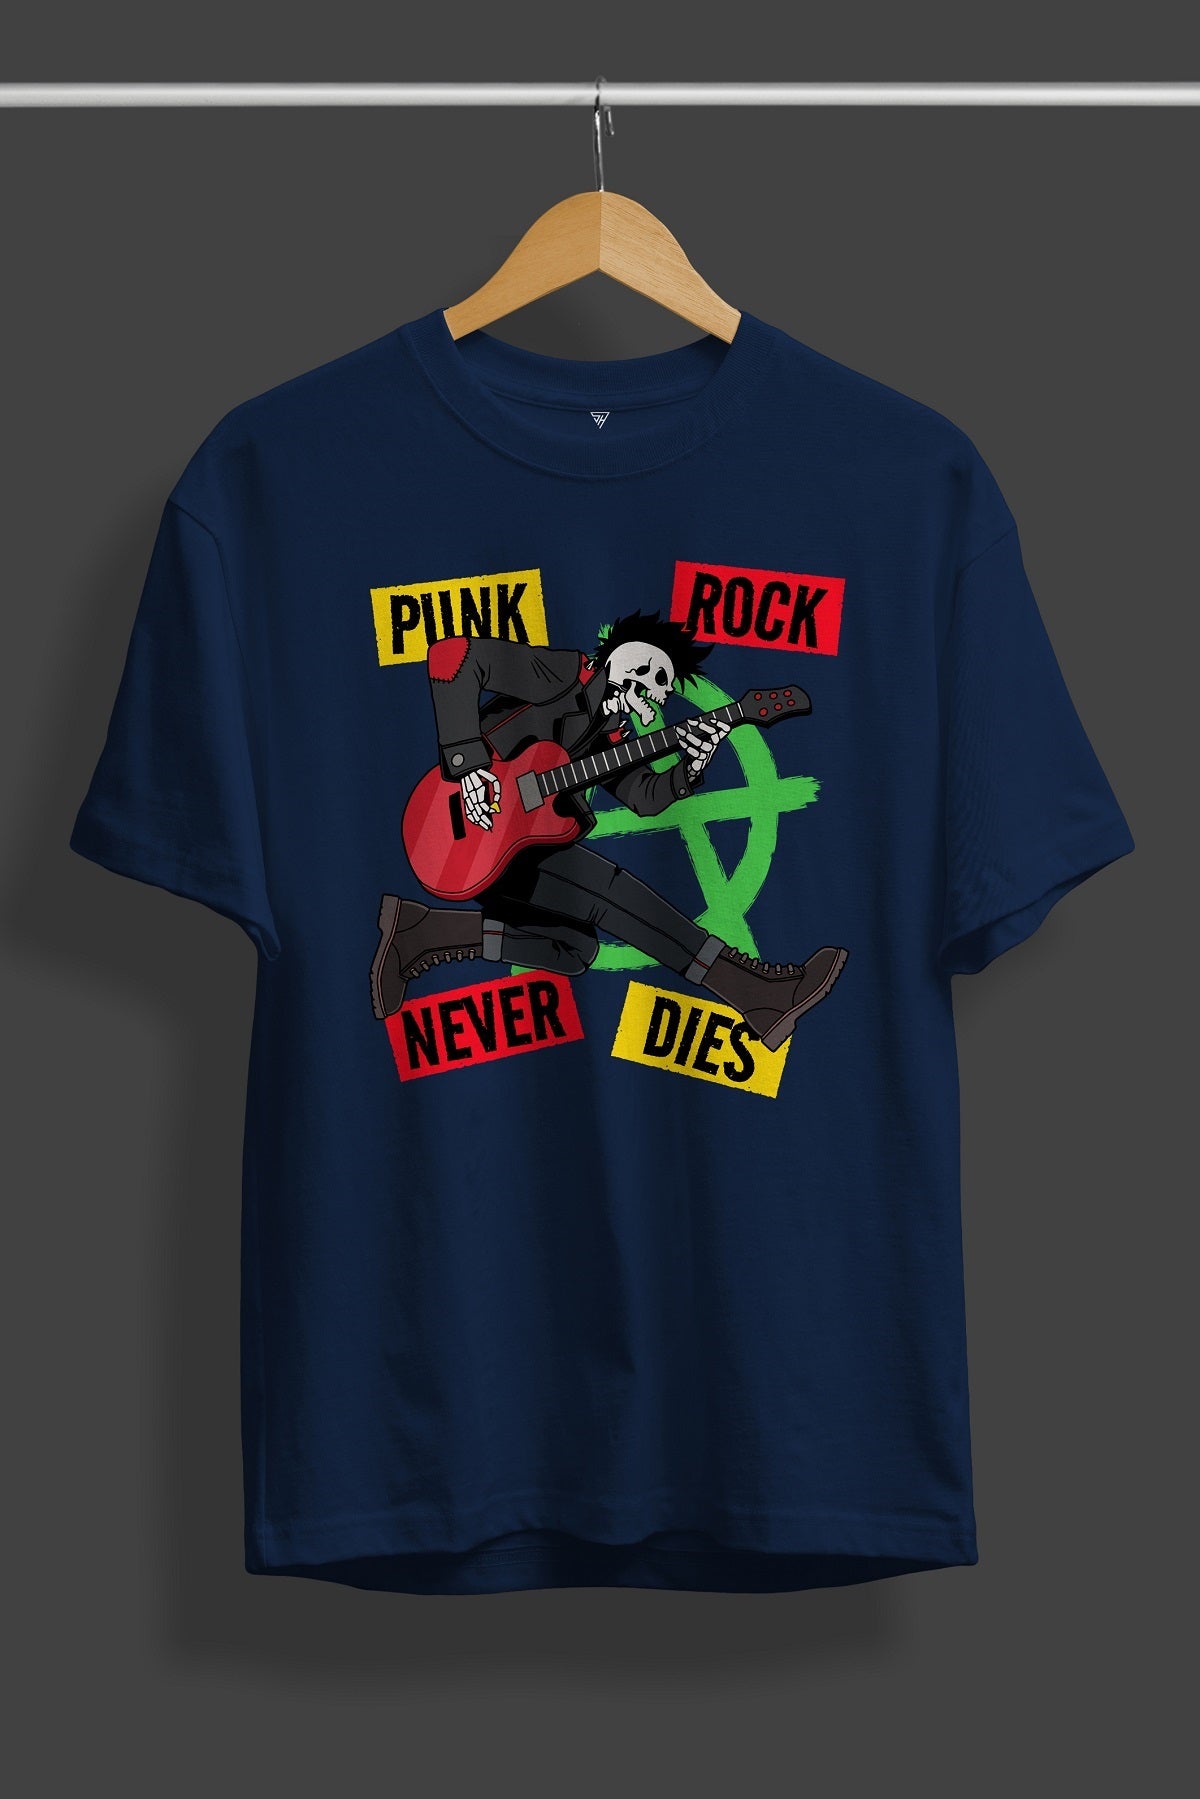 Punk Rock Never Dies Printed T-Shirt - SQUIREHOOD